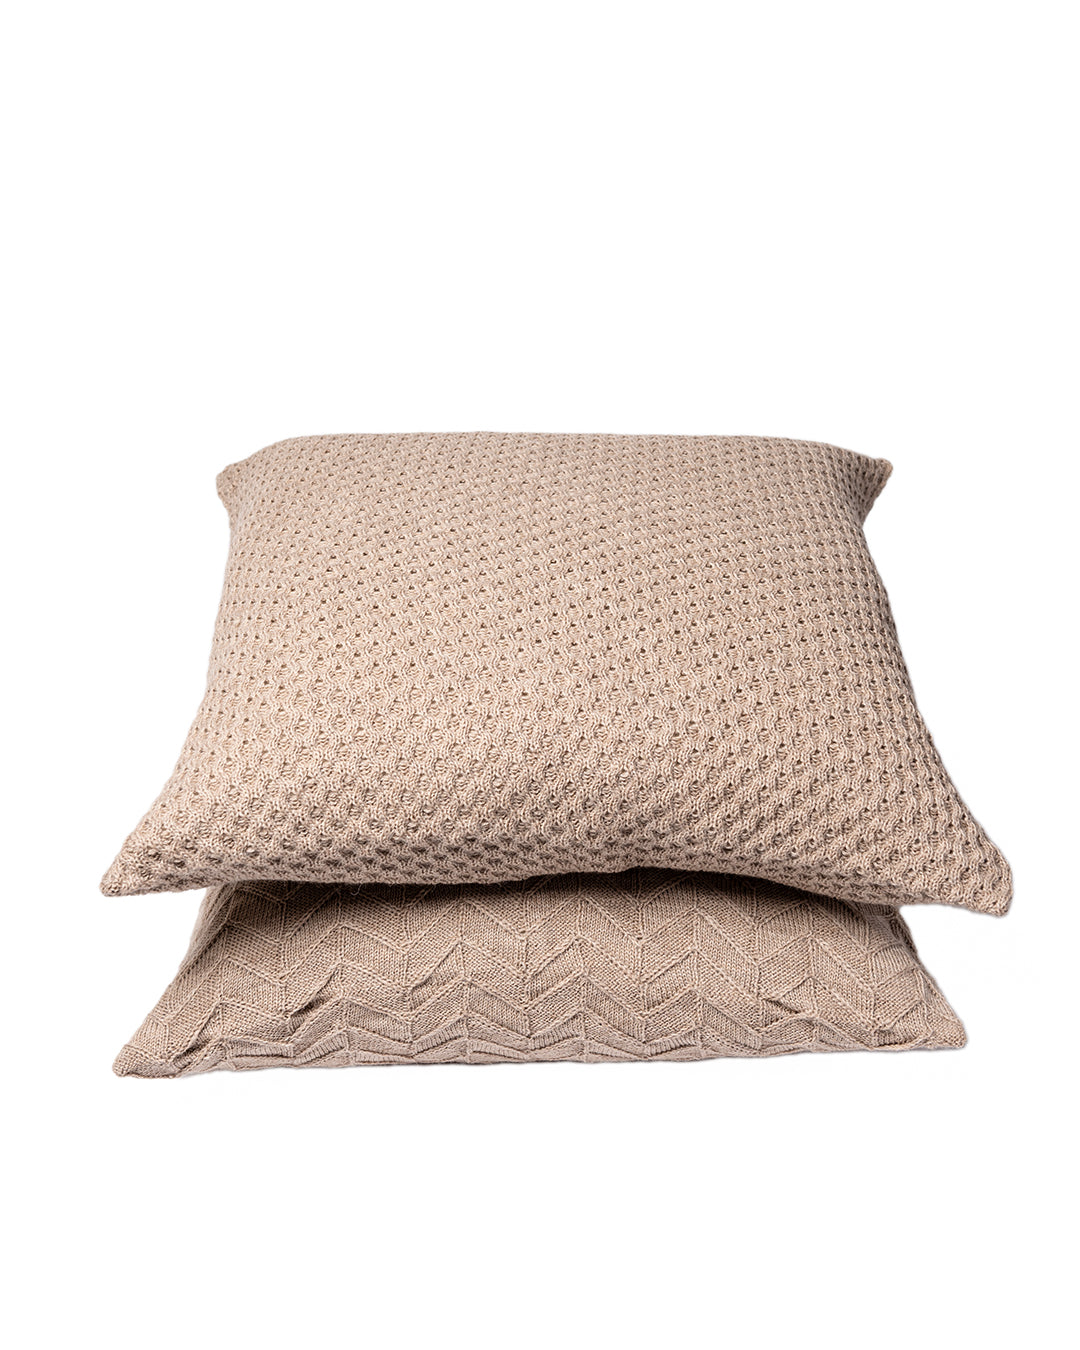 PRE-ORDER / Fiorella Myklebust Oslo - Pillowcase "Honeycomb"